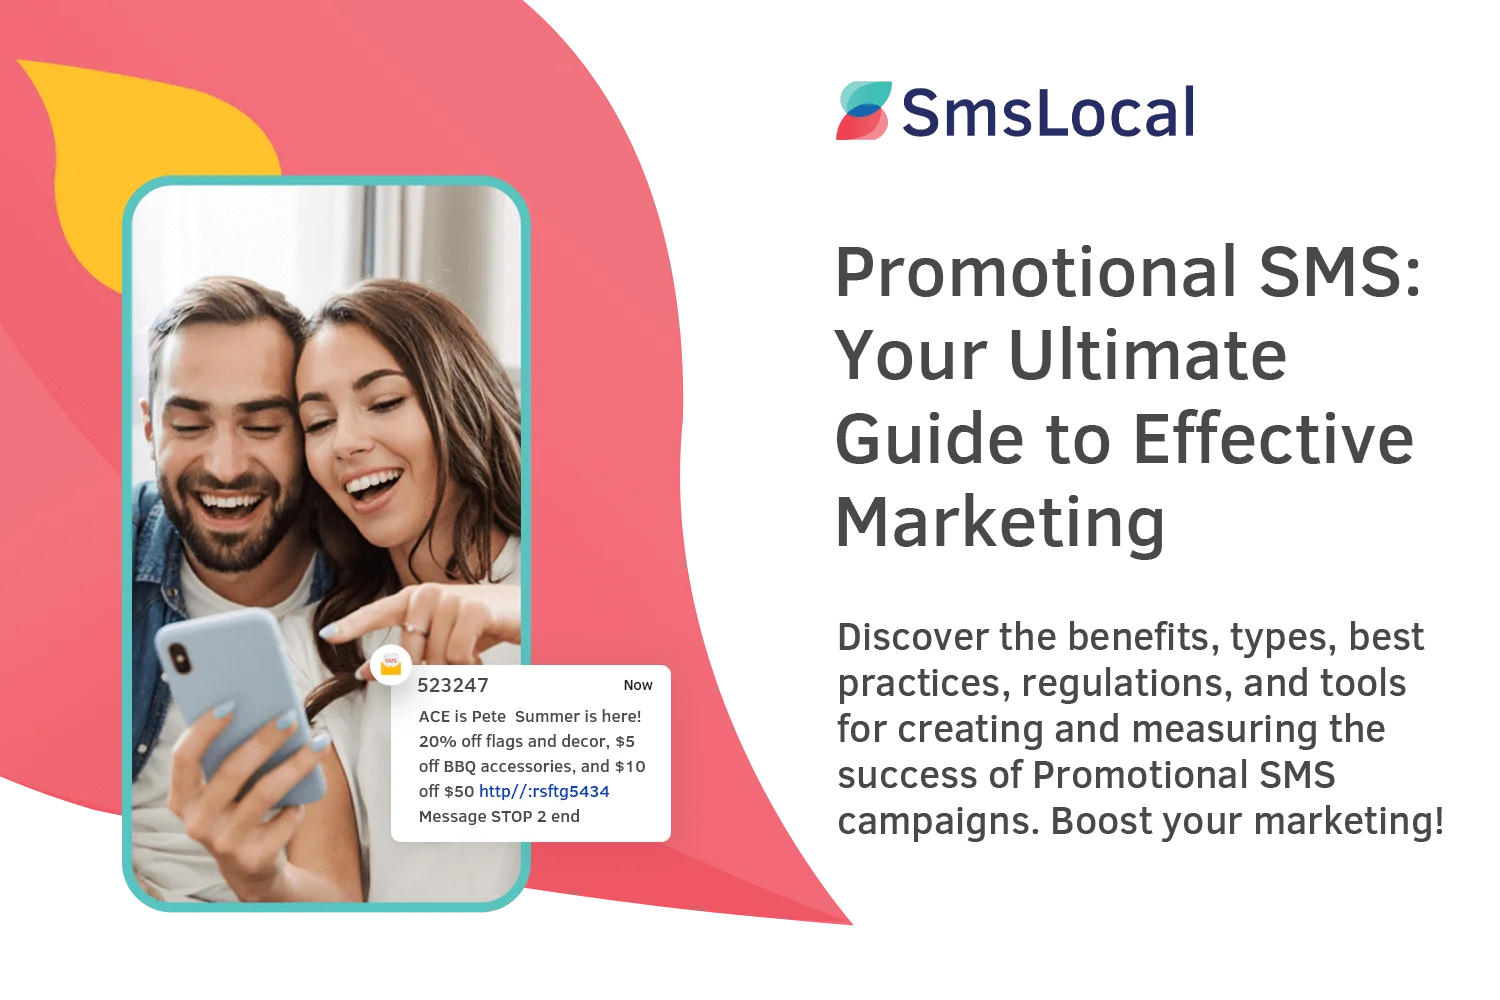 promotional bulk sms